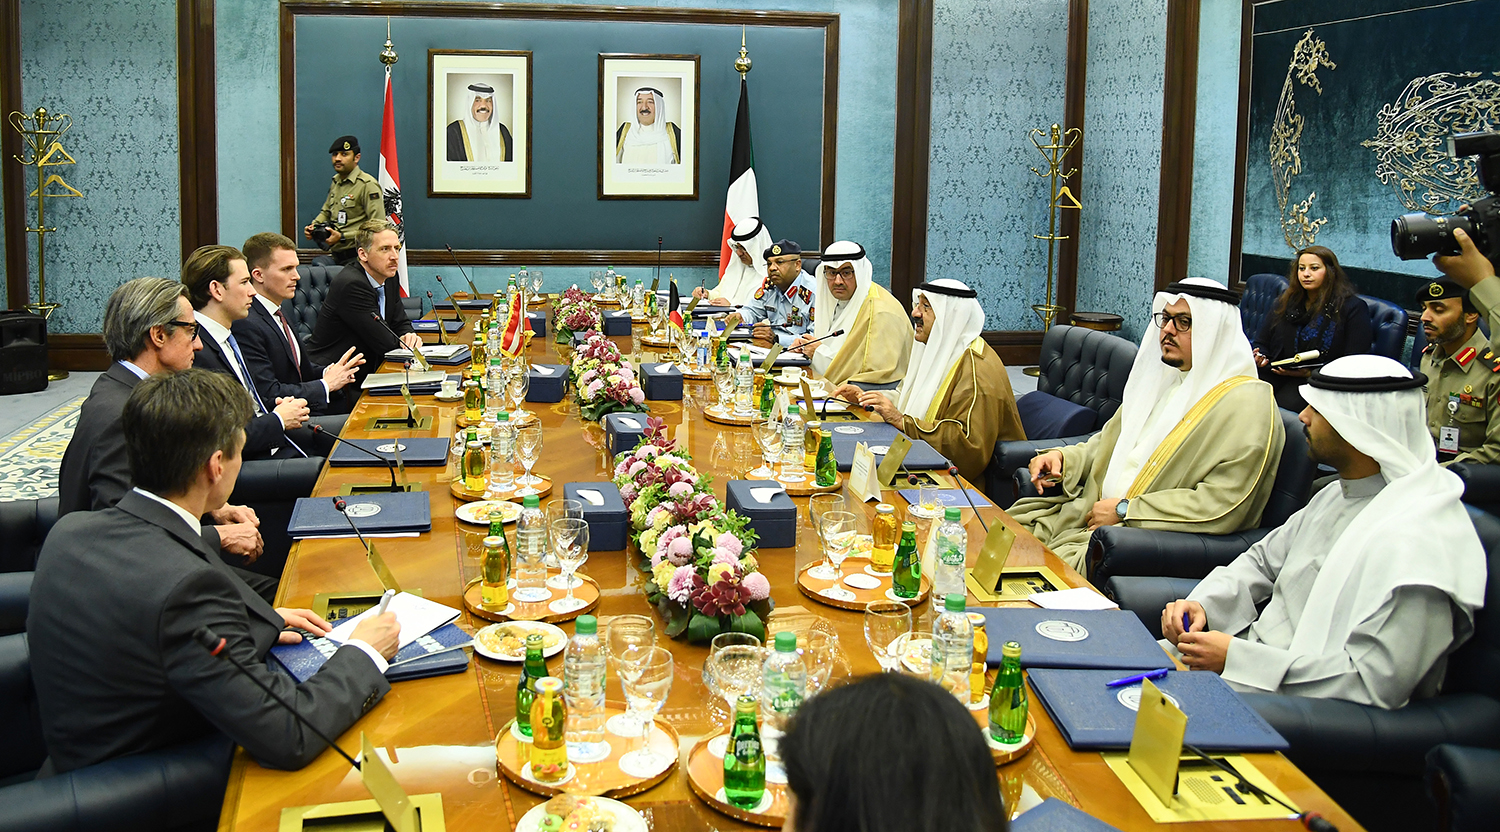 Visiting Chancellor of Austria Sebastian Kurz meets with First Deputy Premier and Defense Minister Sheikh Nasser Sabah Al-Ahmad Al-Sabah